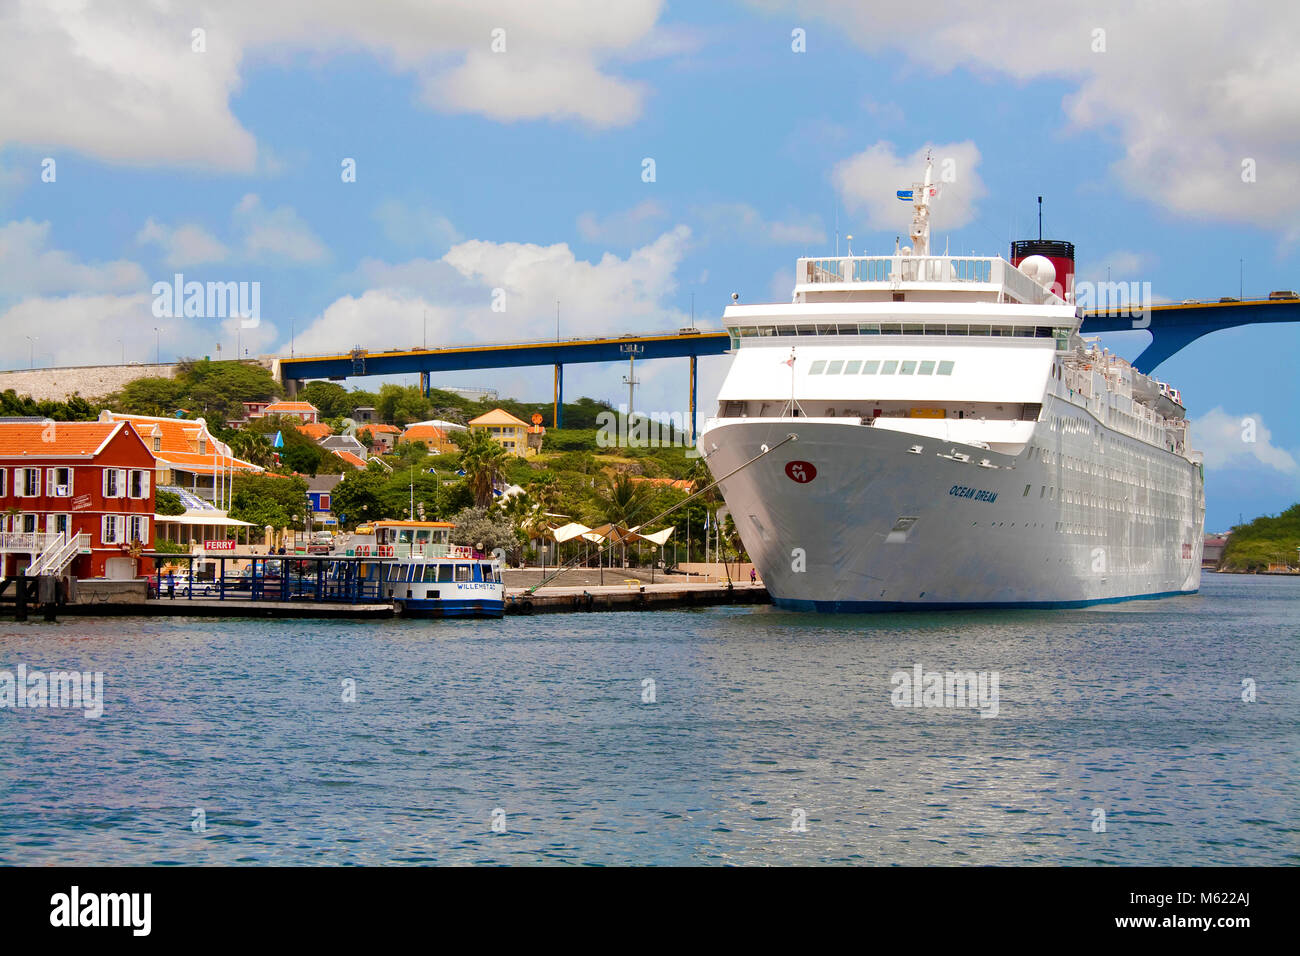 Cruise ship at Sint Anna Baai, Otrobanda district, Queen-Juliana bridge, Willemstad, Curacao, Netherlands Antilles, Caribbean Stock Photo